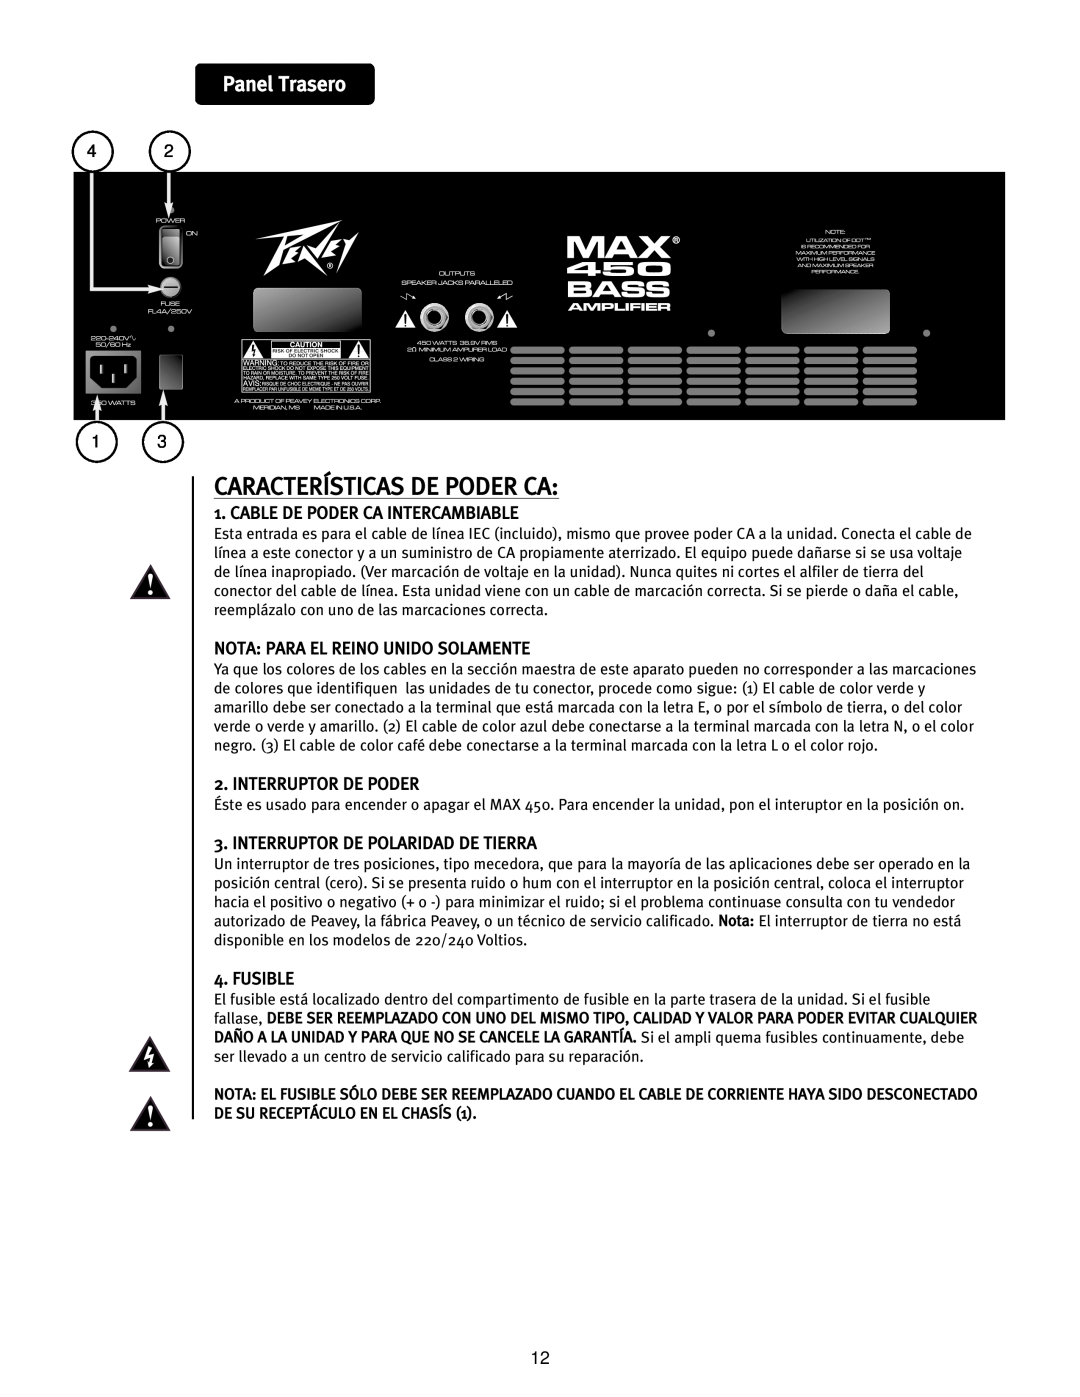 Peavey 450 operation manual Características De Poder Ca, Panel Trasero 